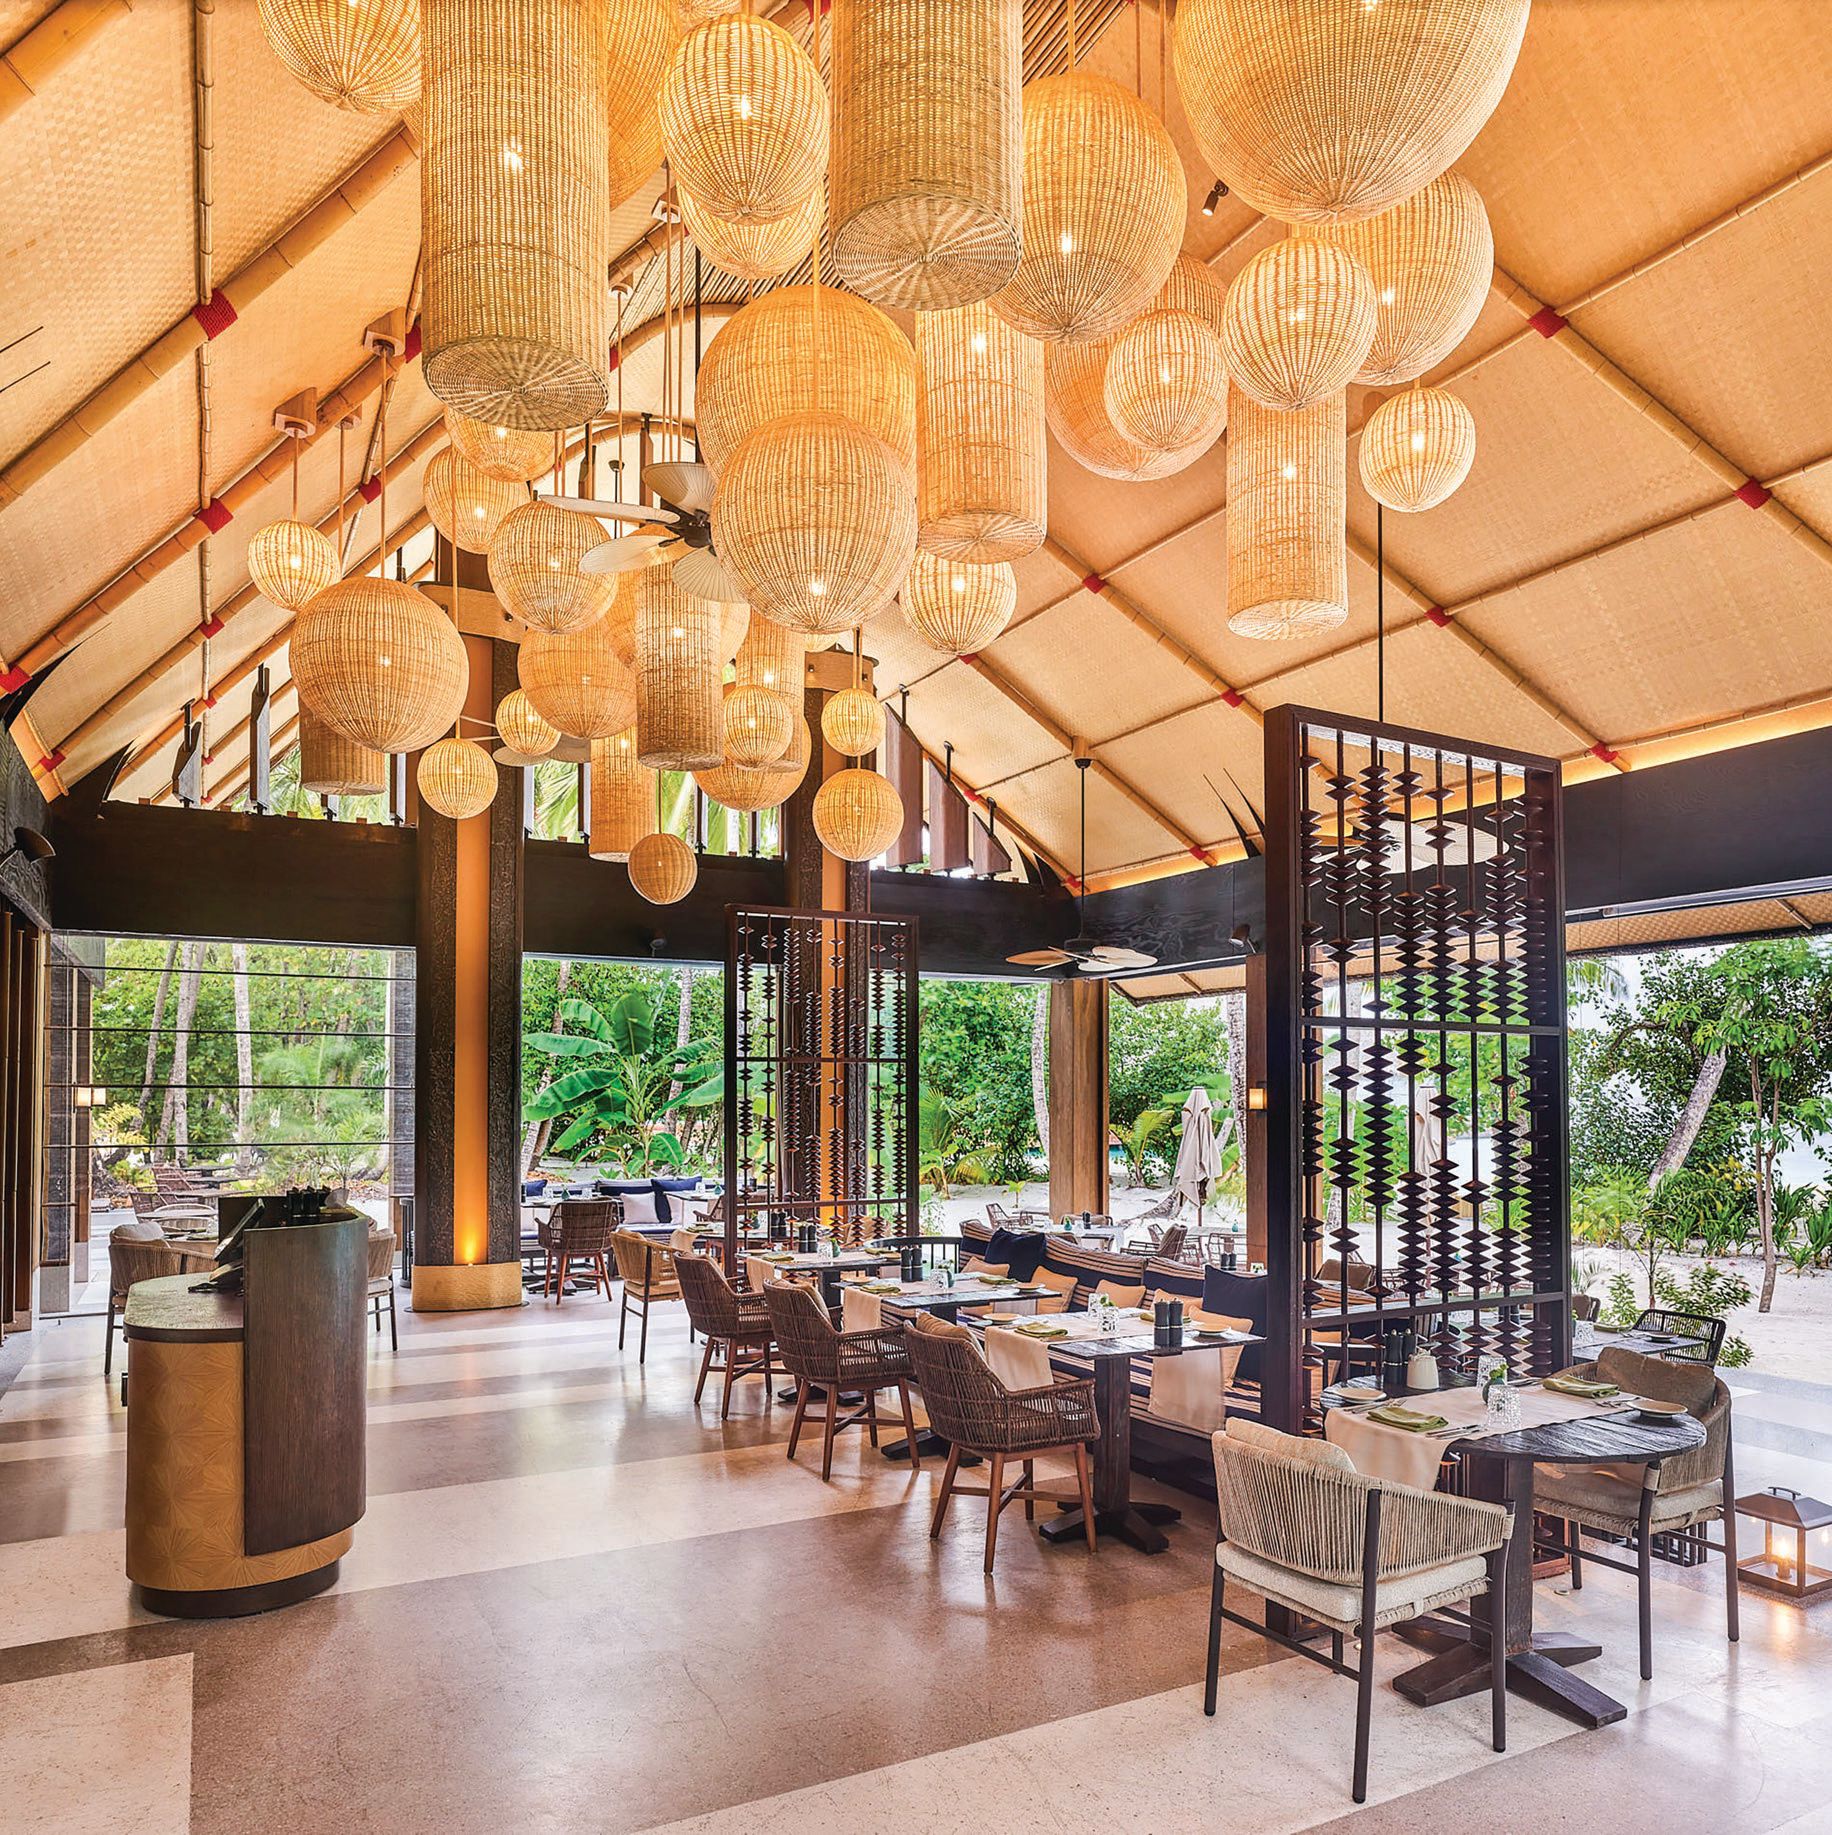 Vandhoo restaurant interior. PHOTO COURTESY OF JOALI MALDIVES